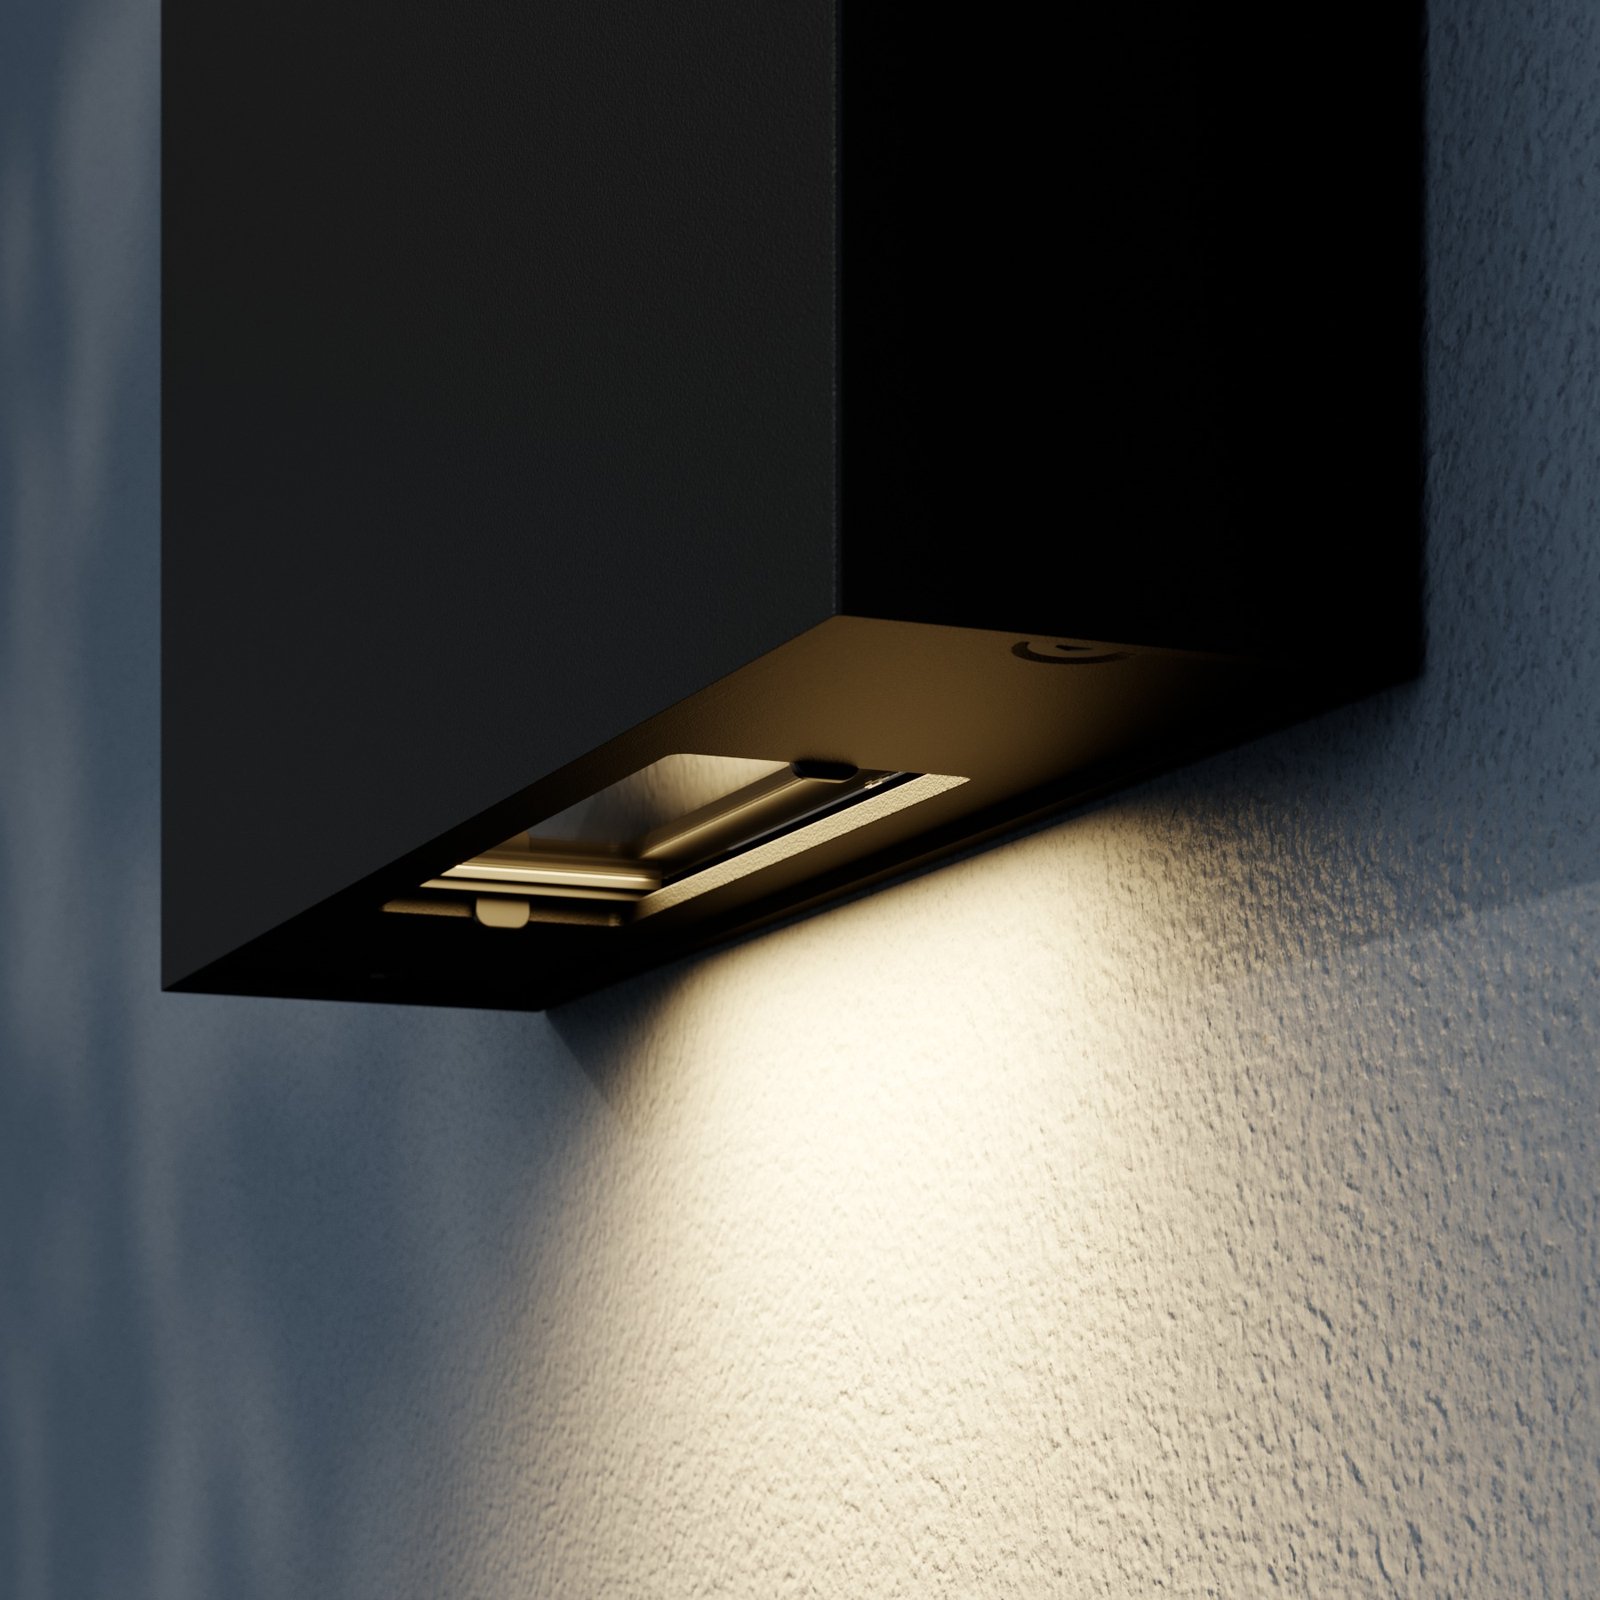 Isalie LED outdoor wall light in dark grey